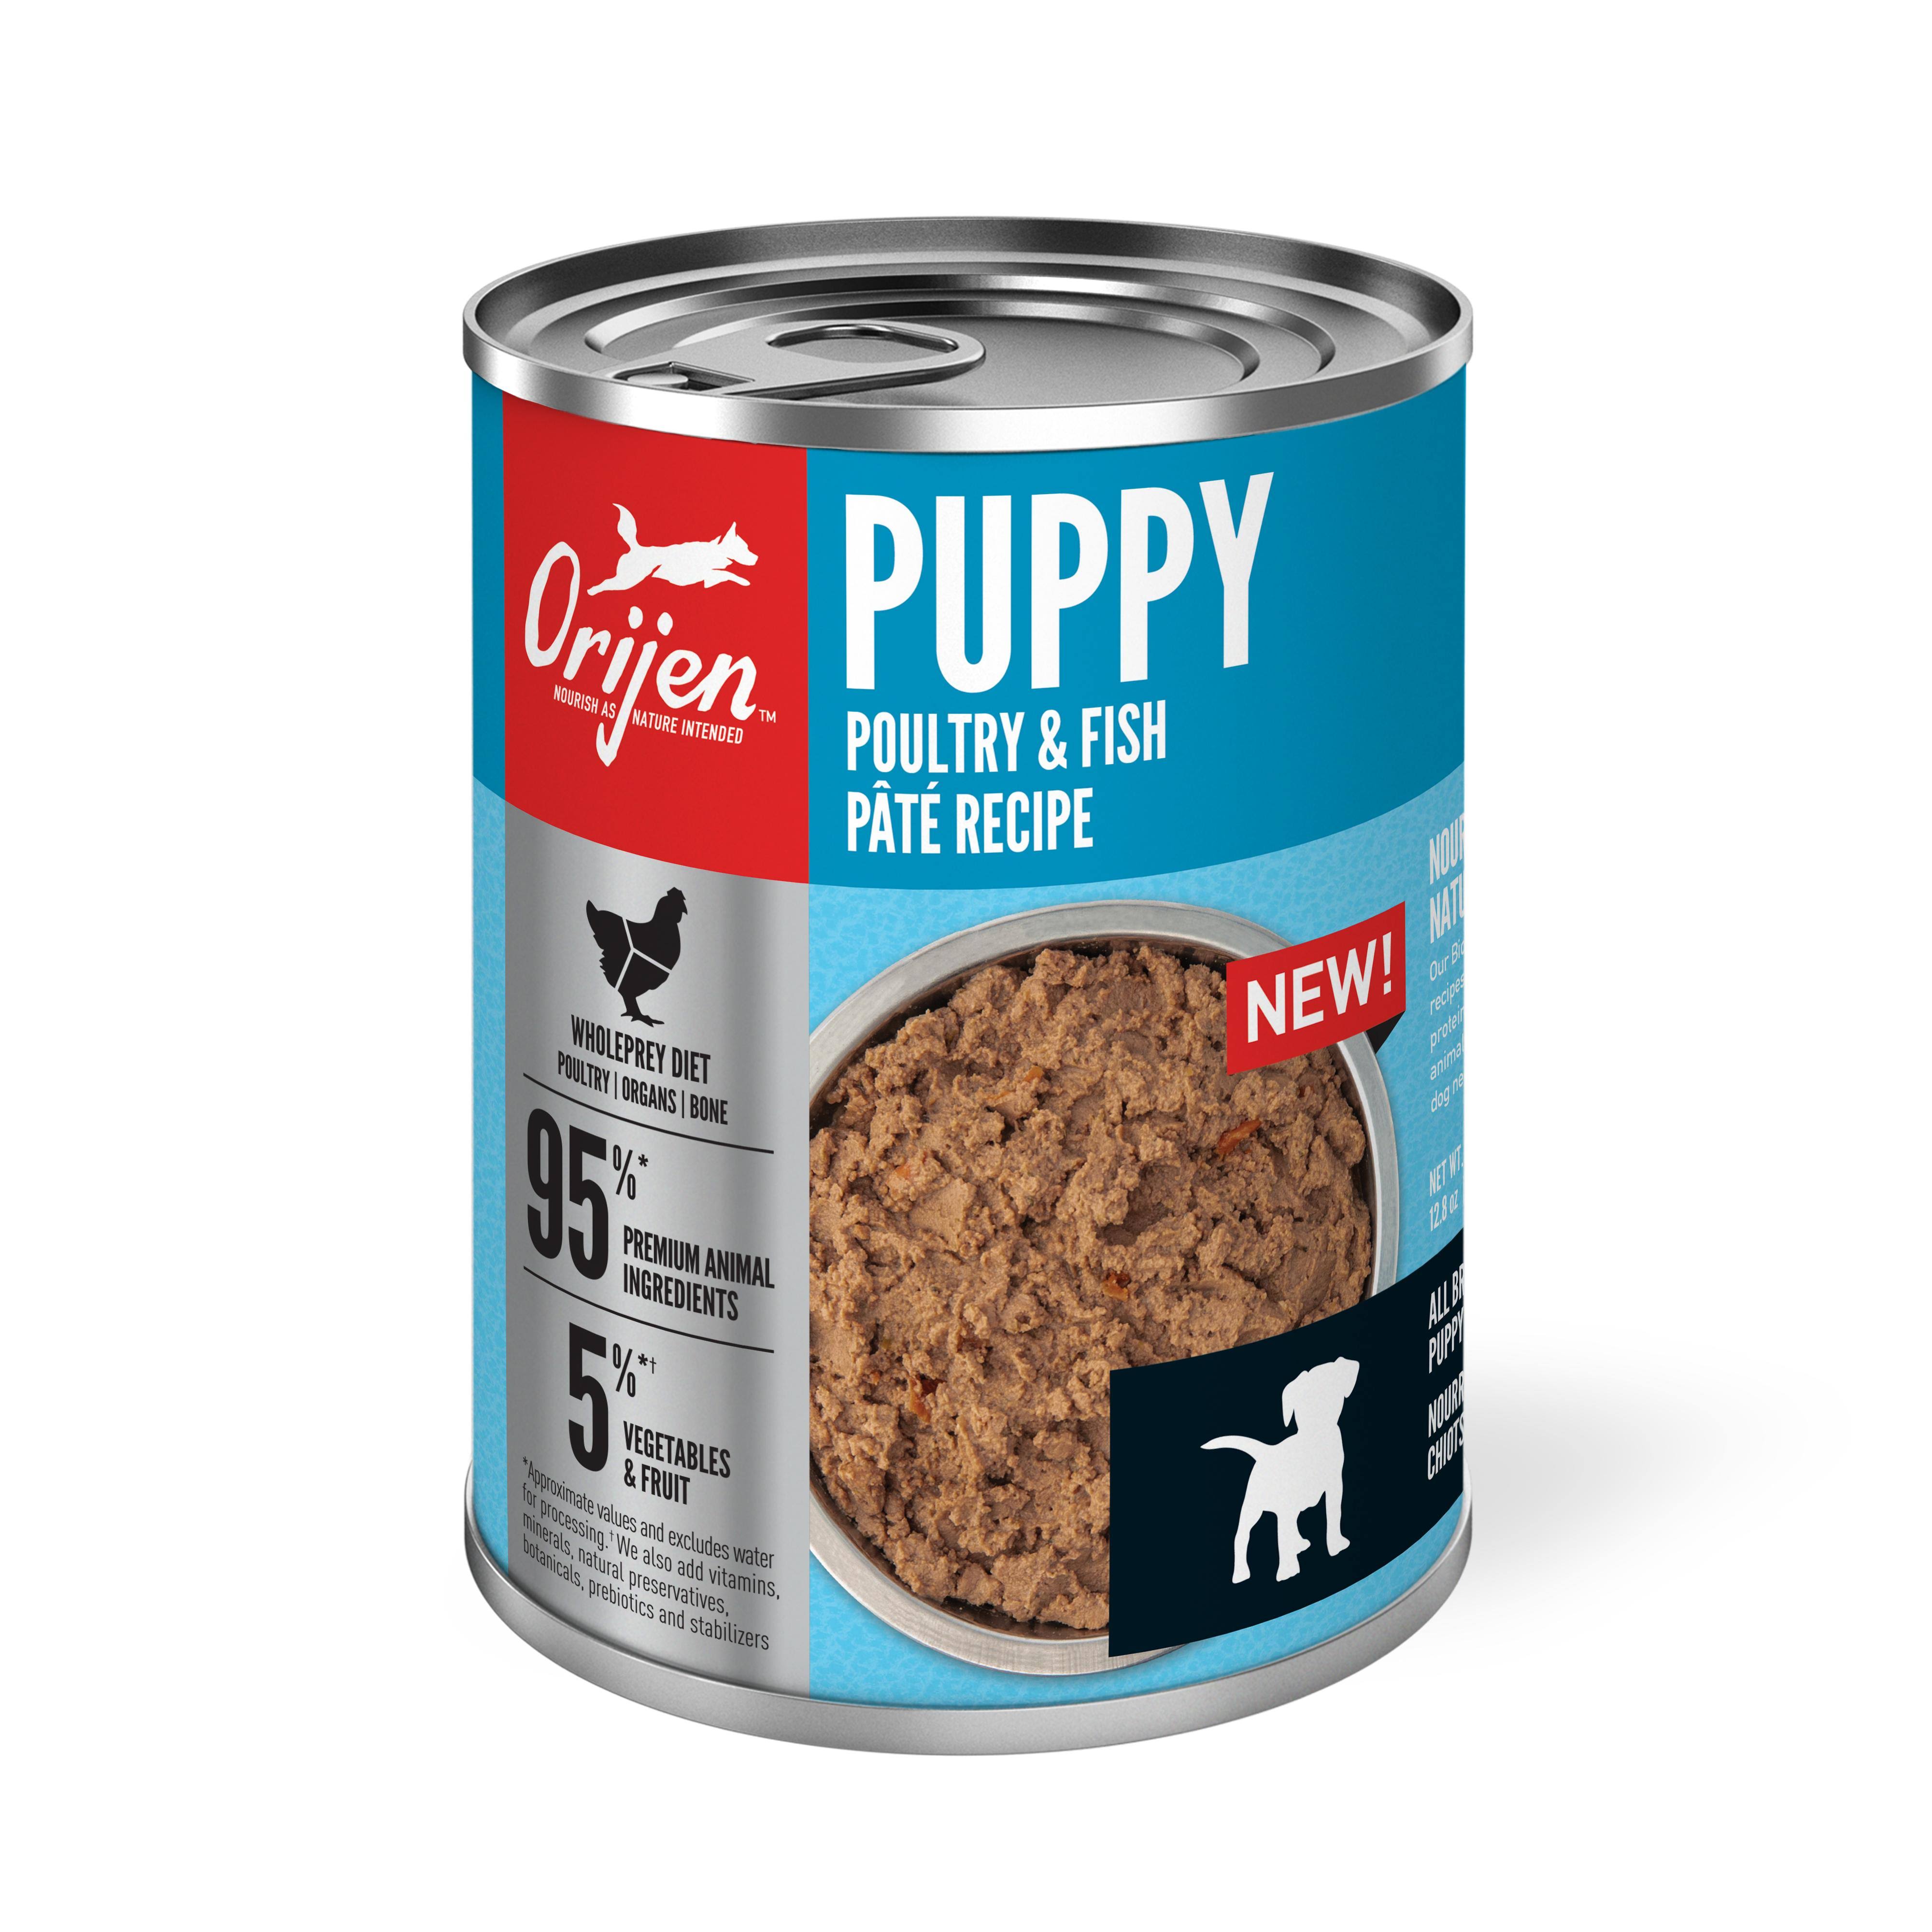 Orijen Puppy Poultry & Fish Pate Dog Food, 12.8-oz